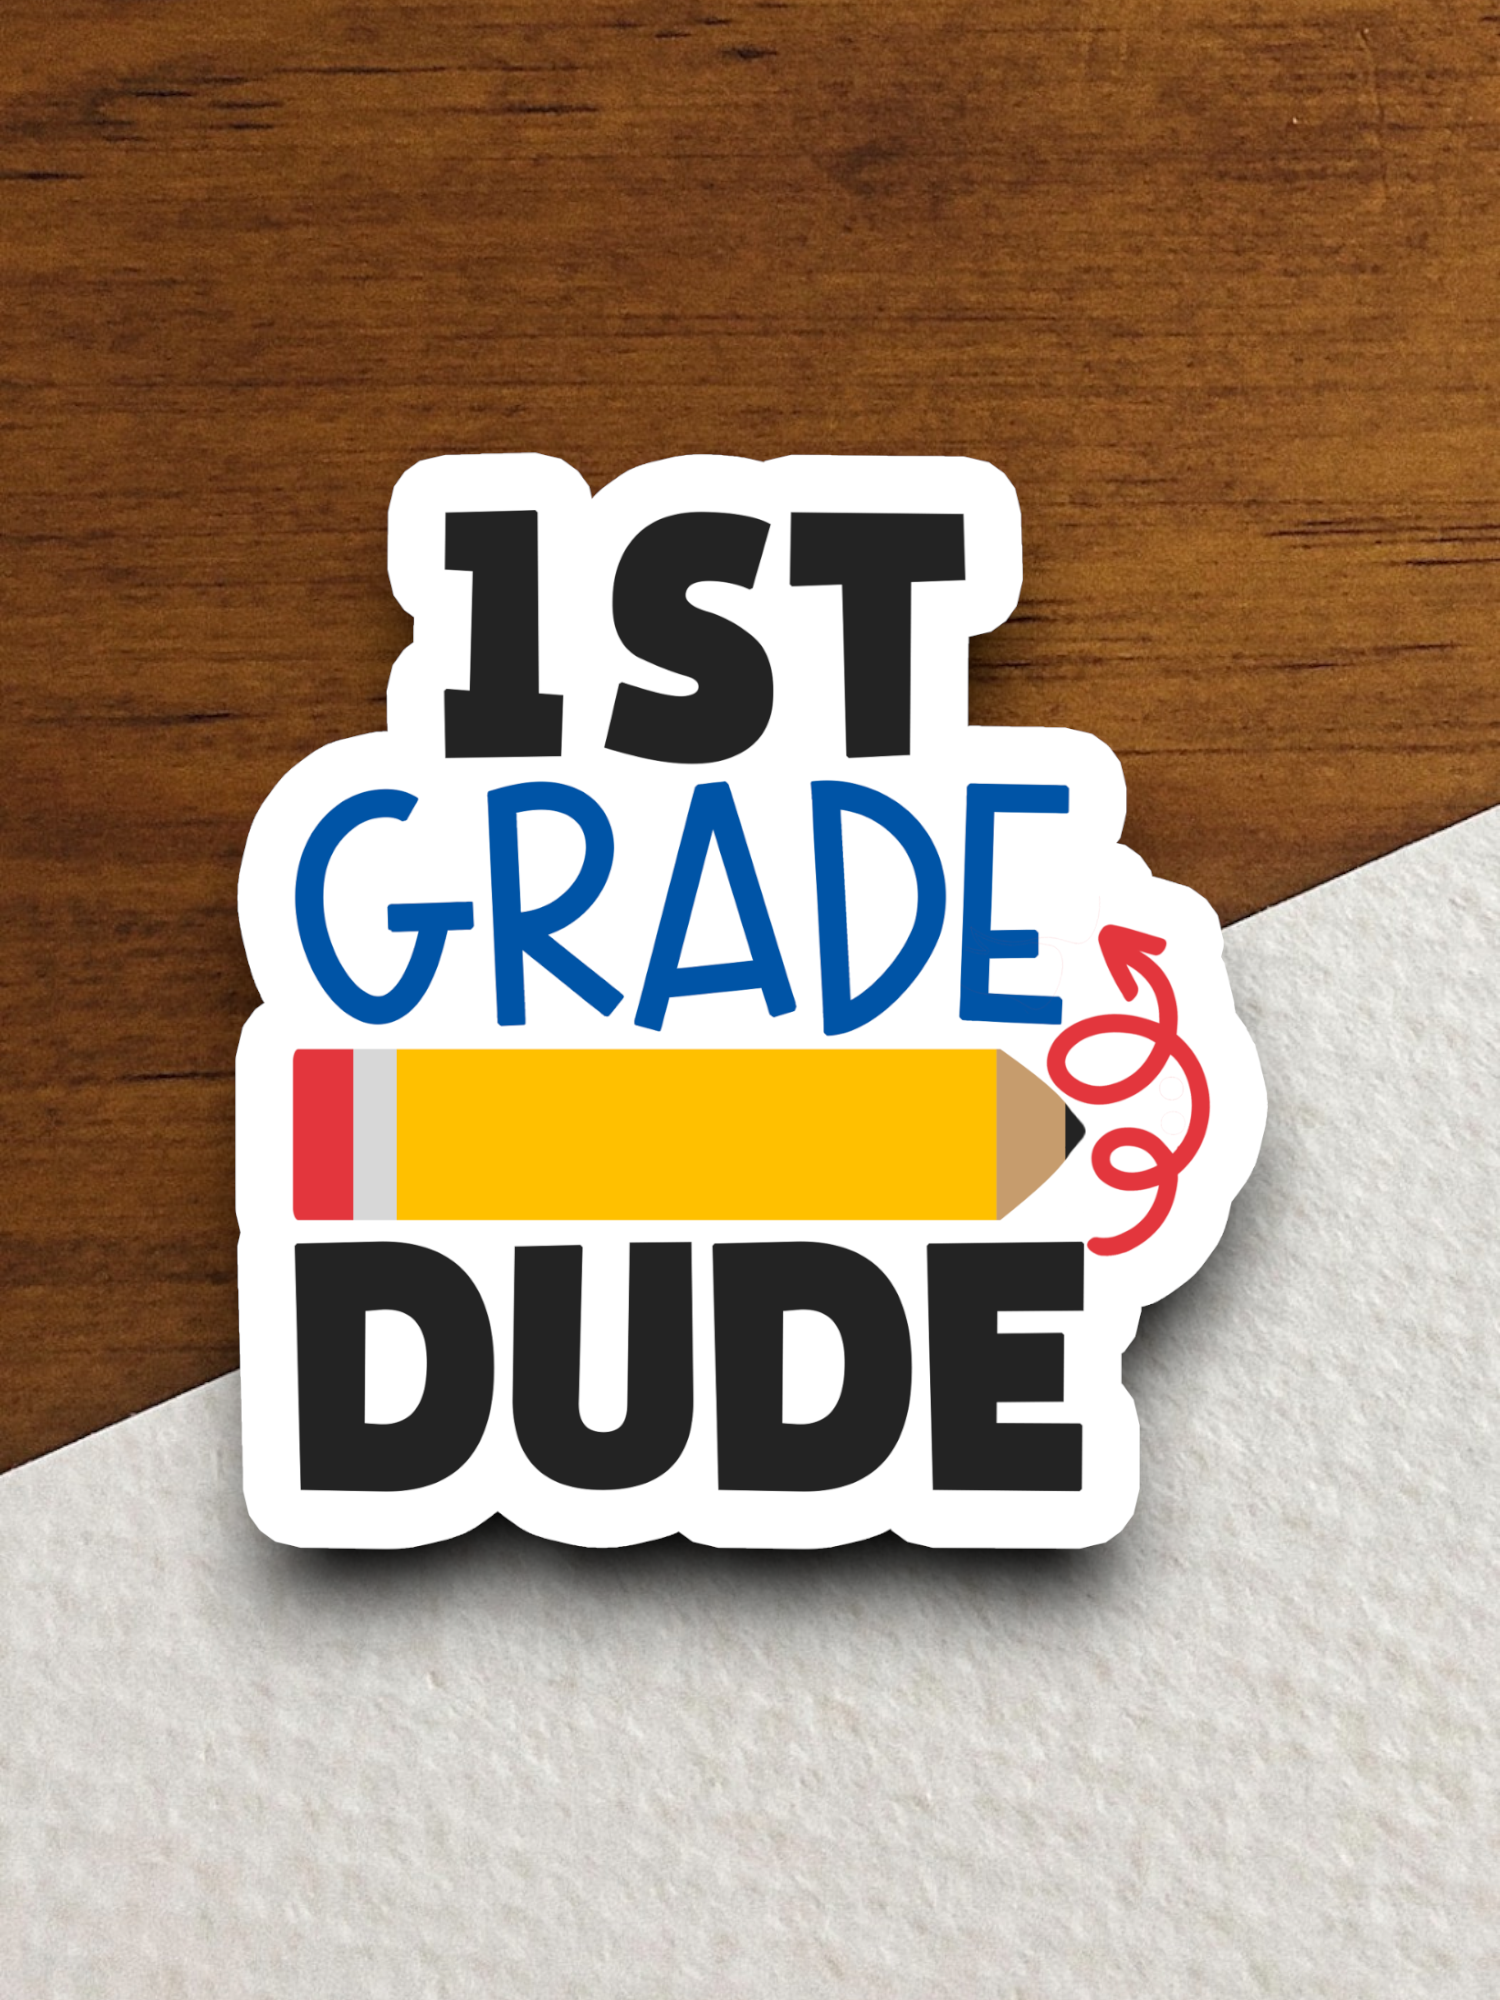 1st Grade Dude - School Sticker